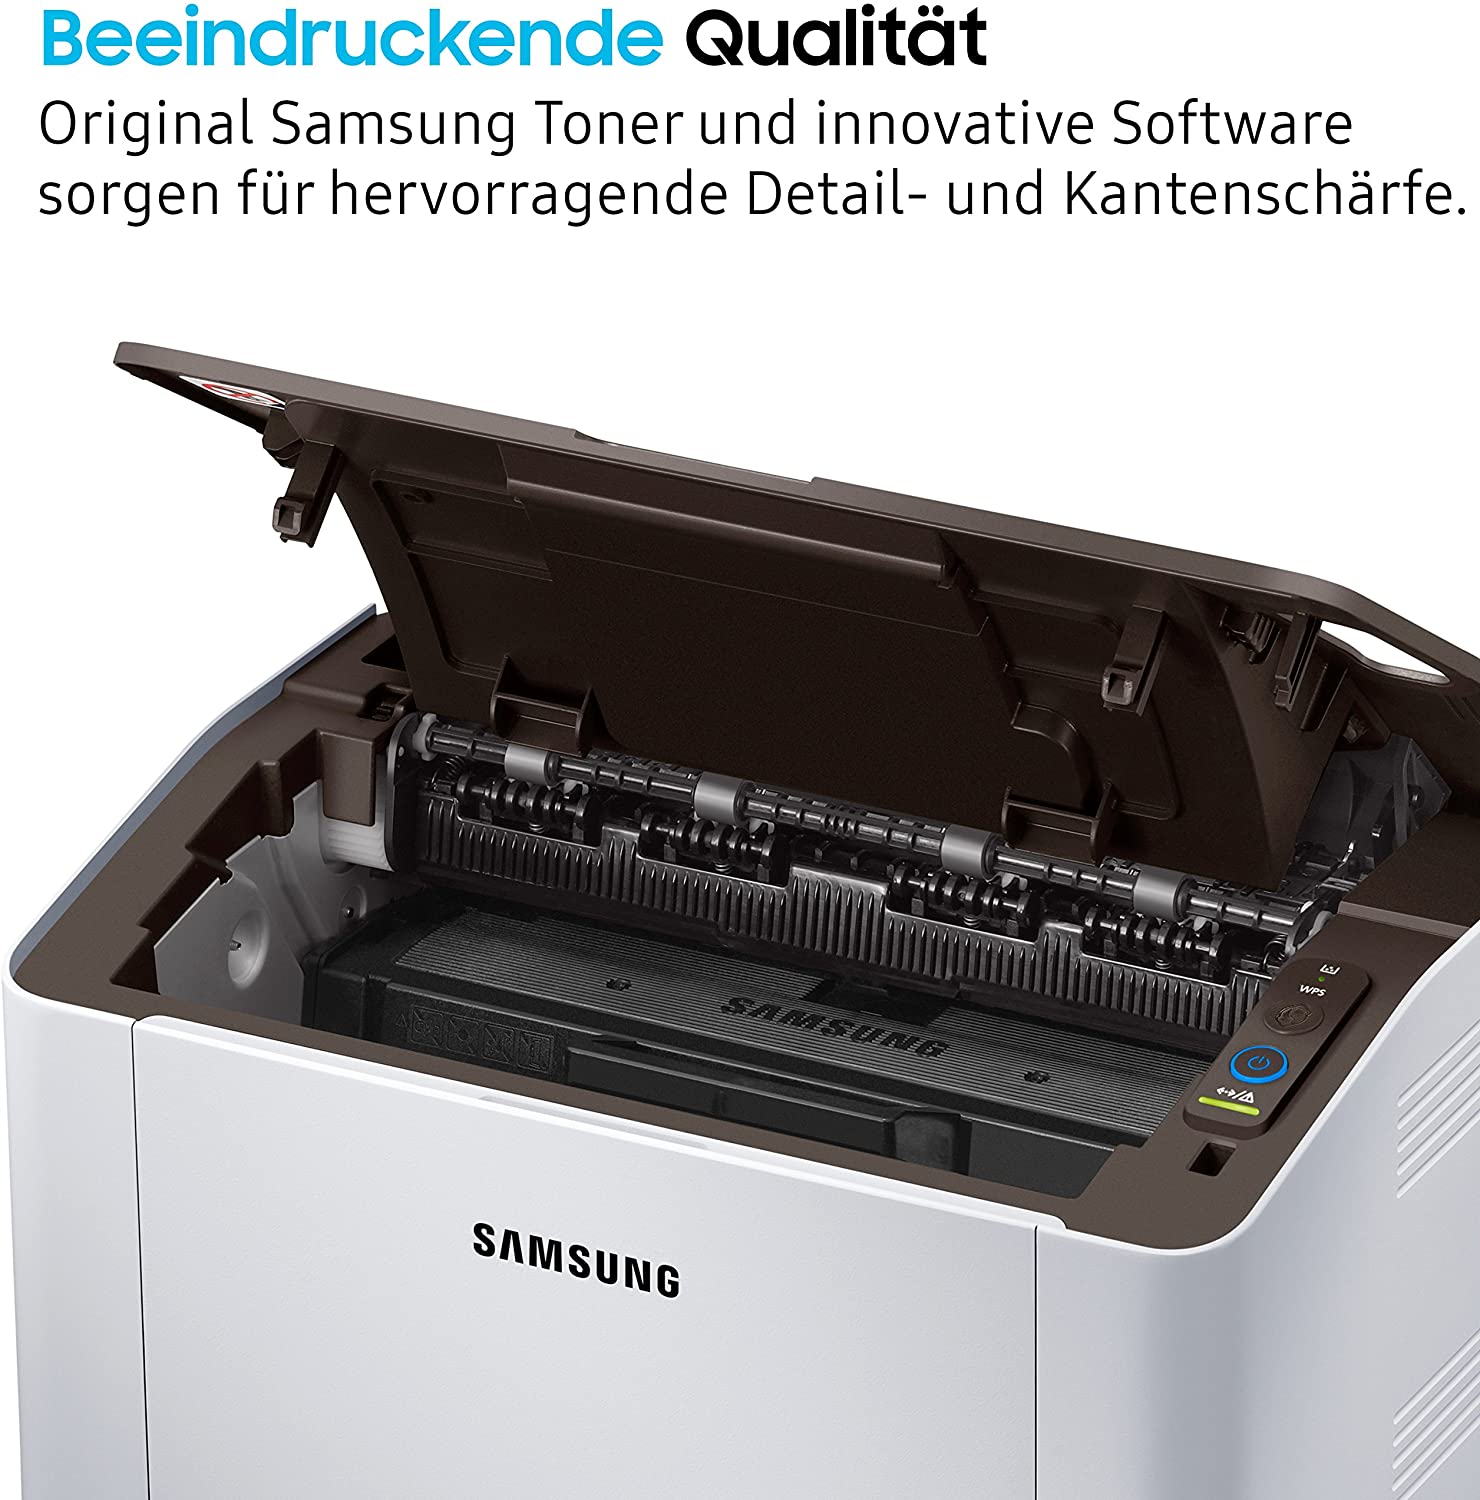 Samsung Xpress M2026w Laserdrucker | WLAN Drucker Test 2021